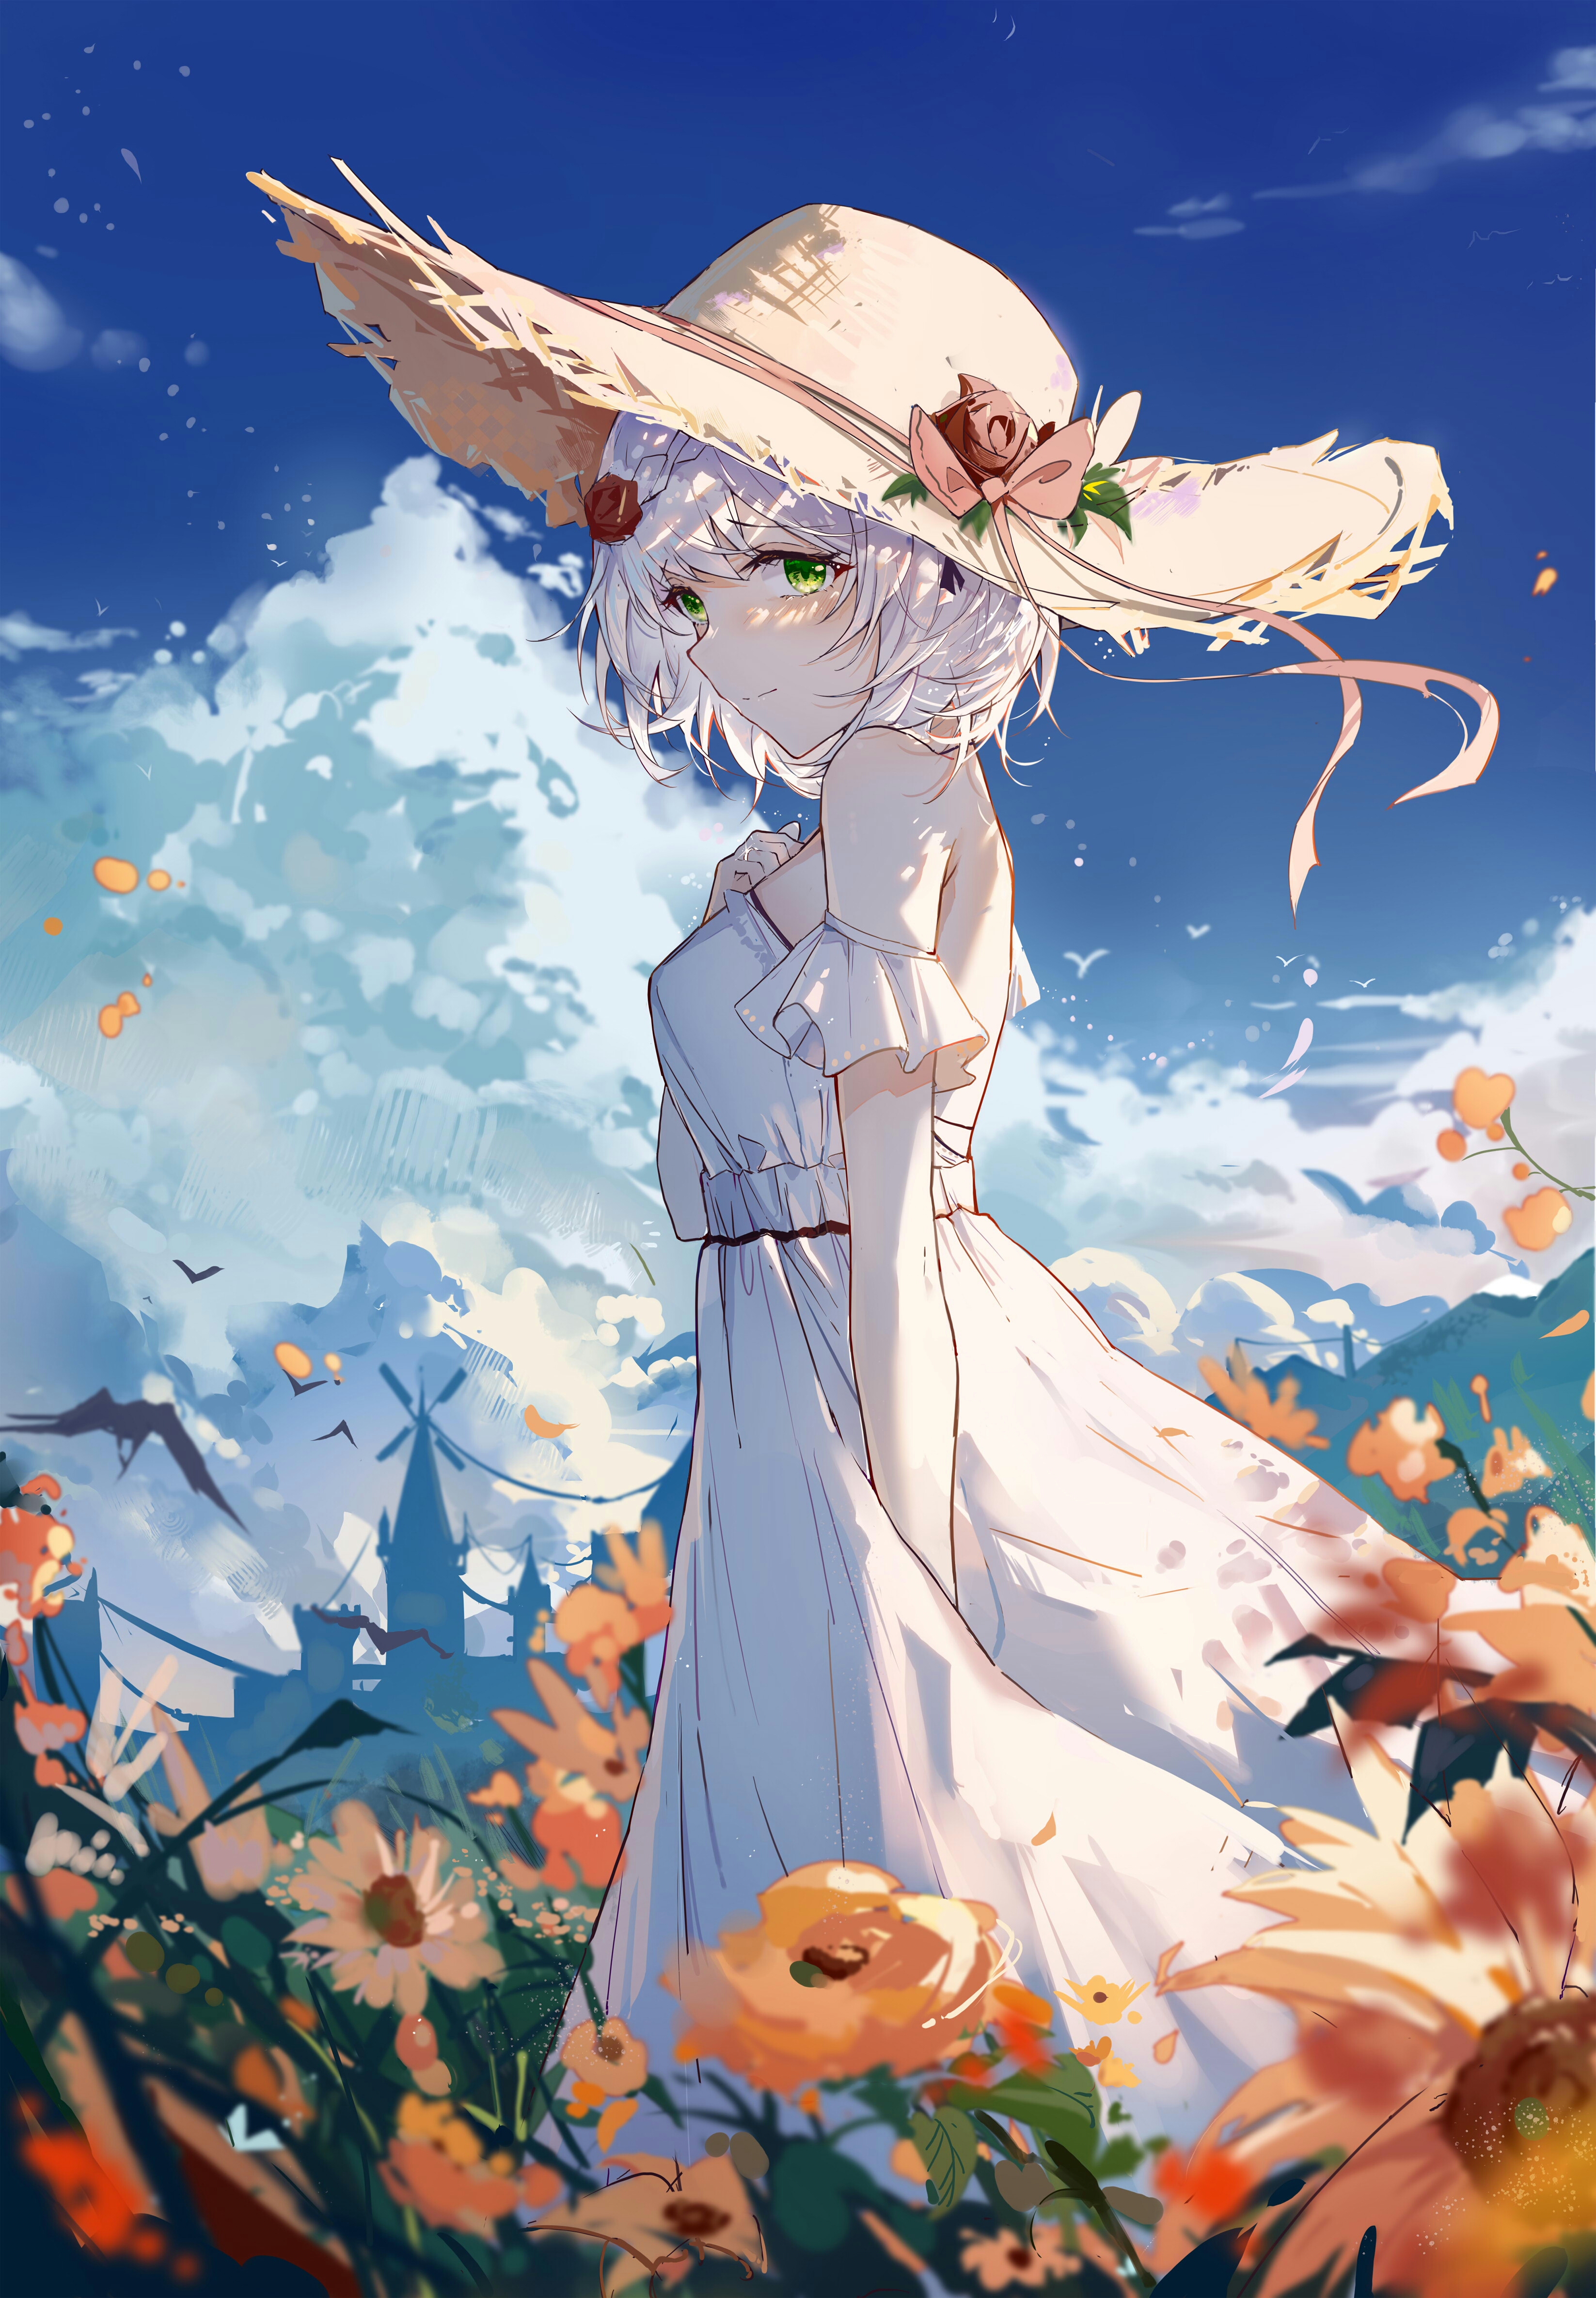 Anime 3293x4740 anime anime girls portrait display straw hat flowers sky clouds Noelle (Genshin Impact) Genshin Impact dress looking at viewer short hair flower in hair